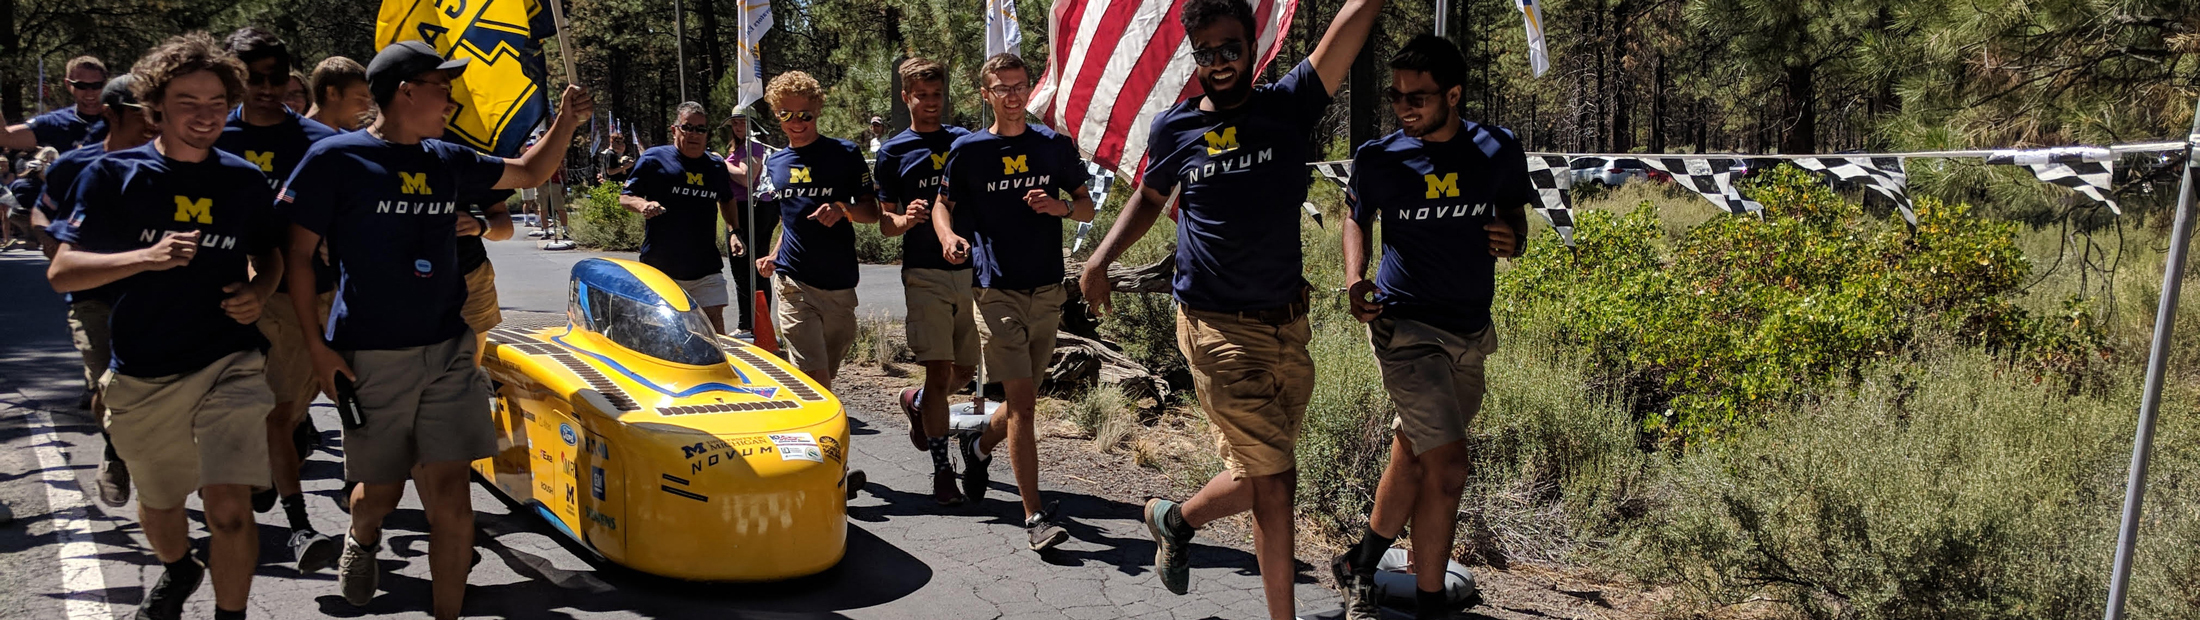 The Michigan Solar Car Team crosses the finish line. Courtesy of American Solar Challenge